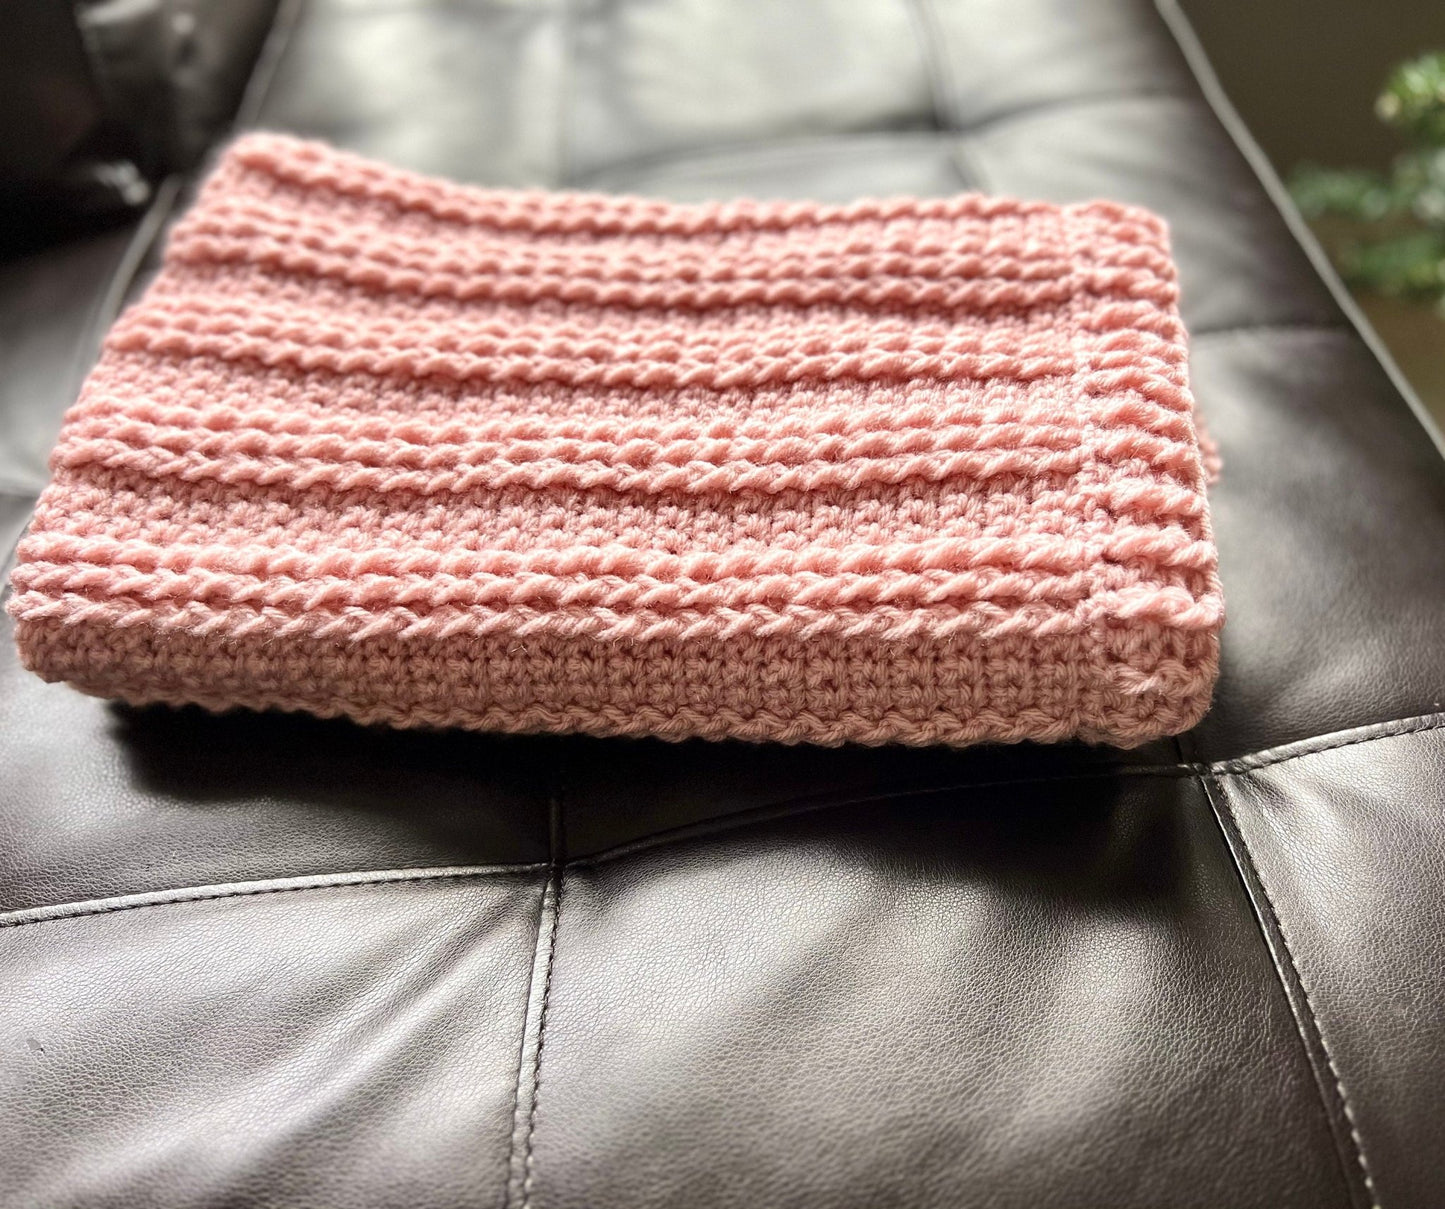 Blanket for baby girl crochet blanket, pink - blanket for baby girl - baby shower gift for baby girl 31”x26”cradle blanket, baby girl gift, - Lilly Grace Sparkle Boutique